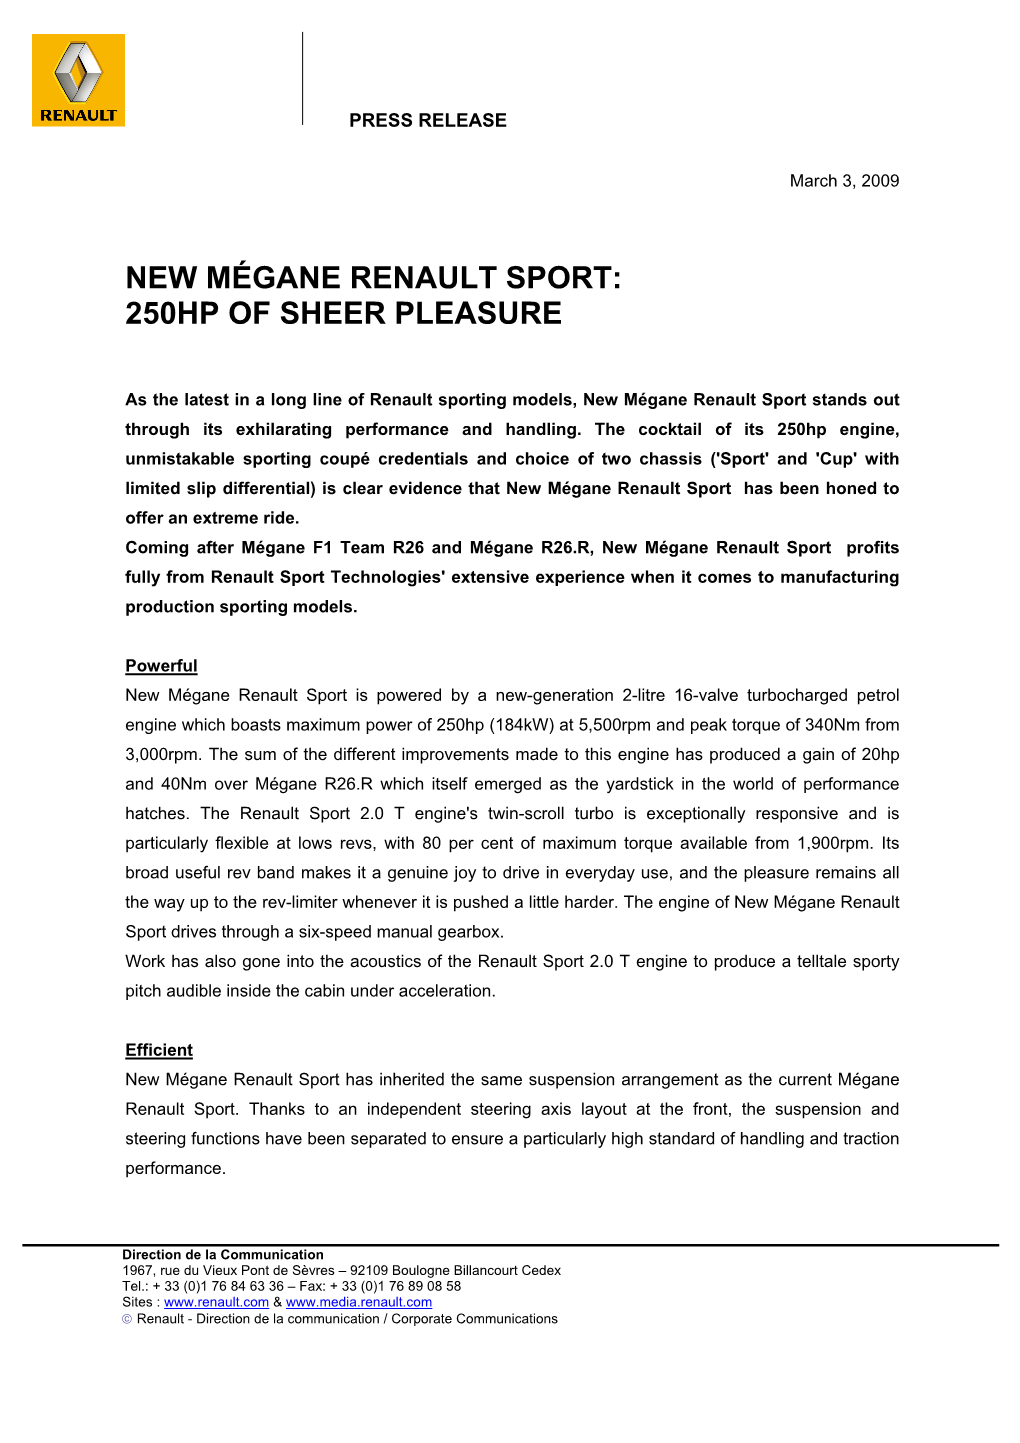 New Mégane Renault Sport: 250Hp of Sheer Pleasure